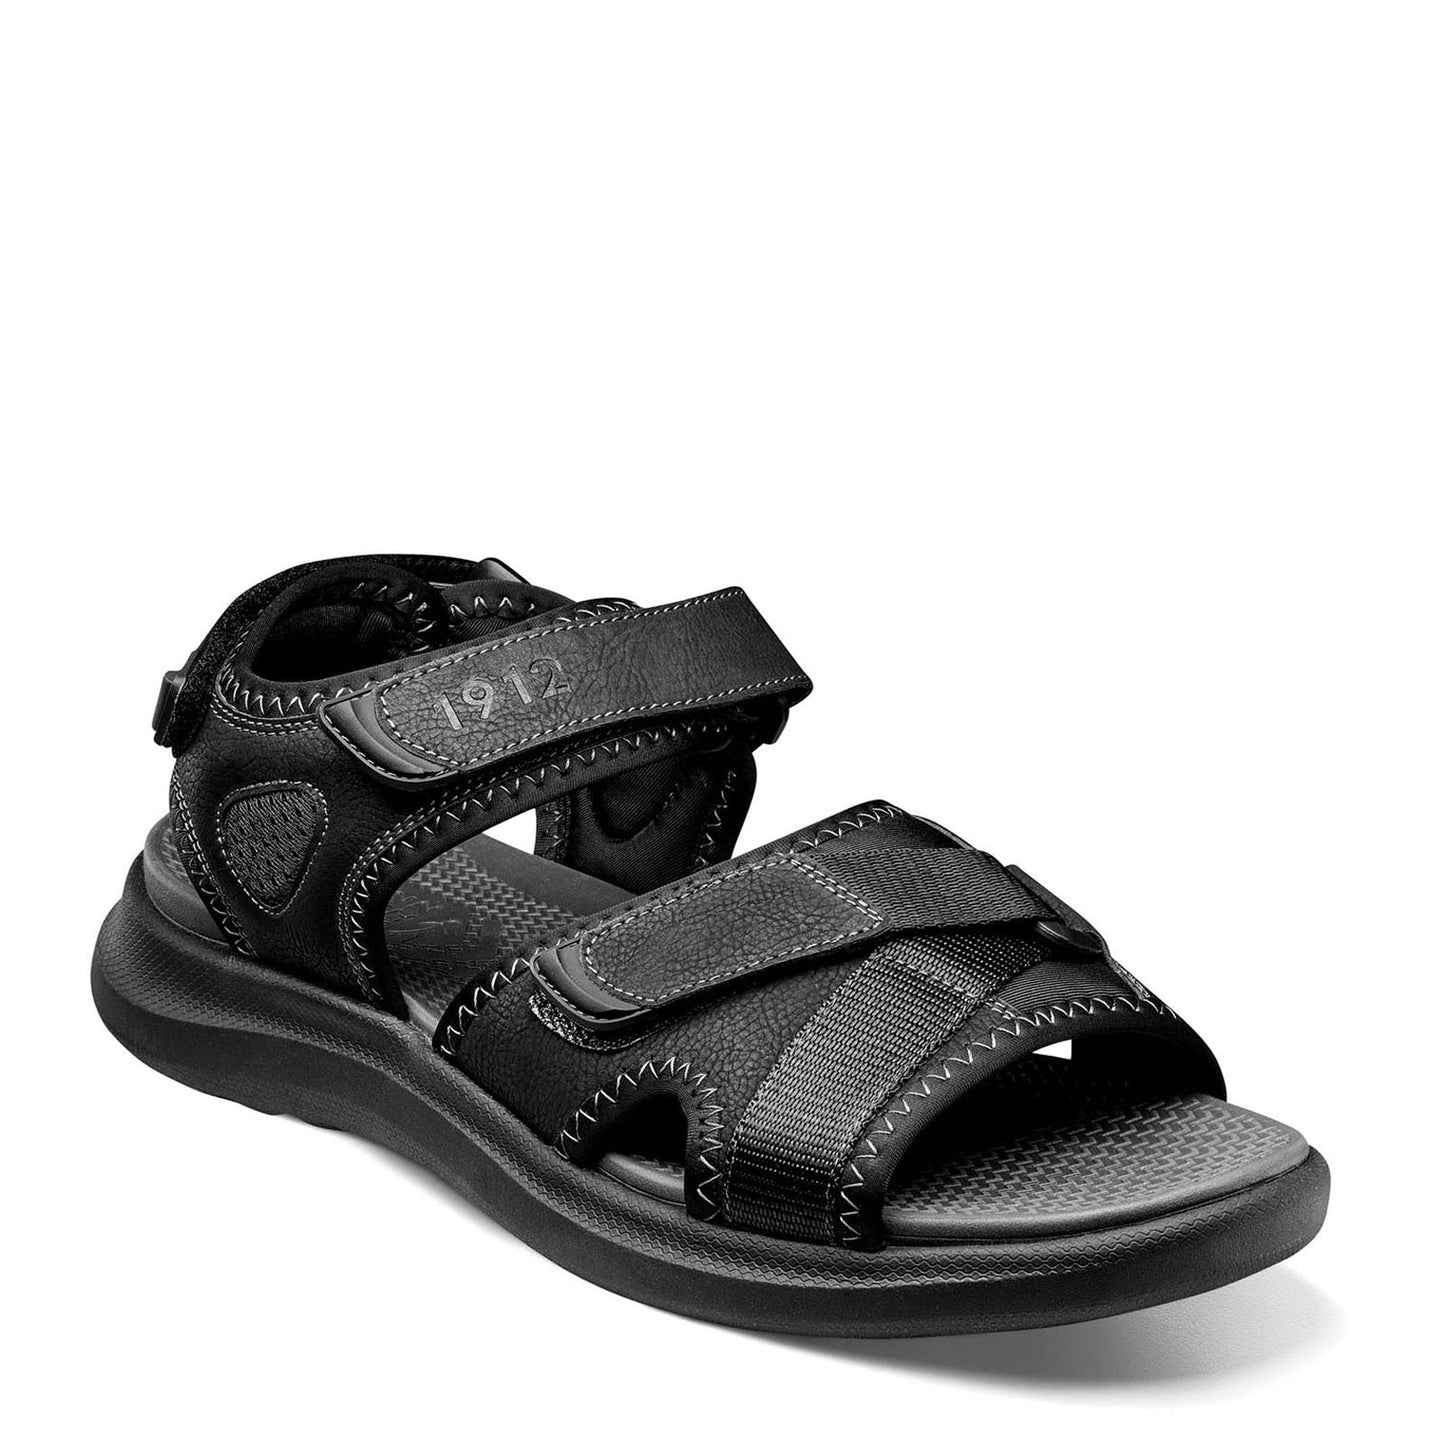 Peltz Shoes  Men's Nunn Bush Rio Vista River Three Strap Sandal BLACK 85011-001